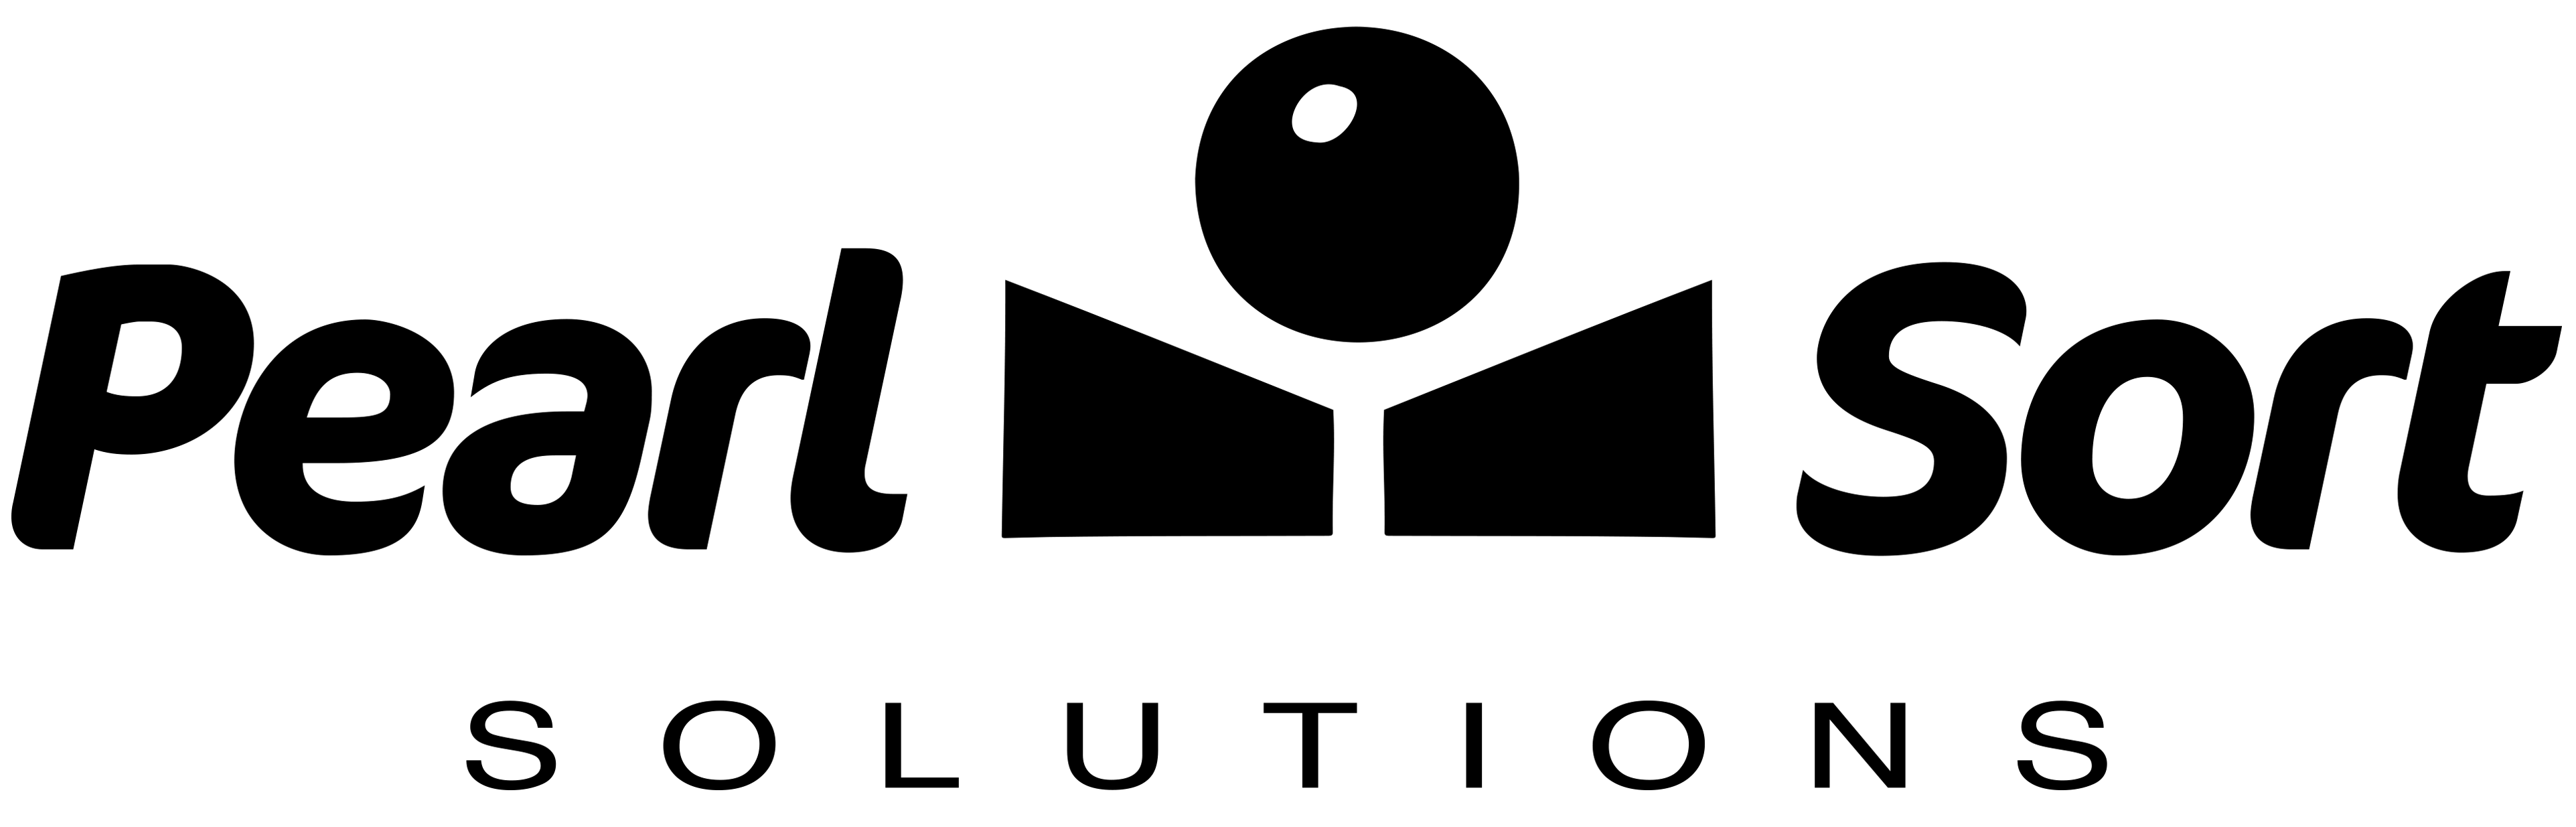 PearlSort-Logo-long-BLK-transparent